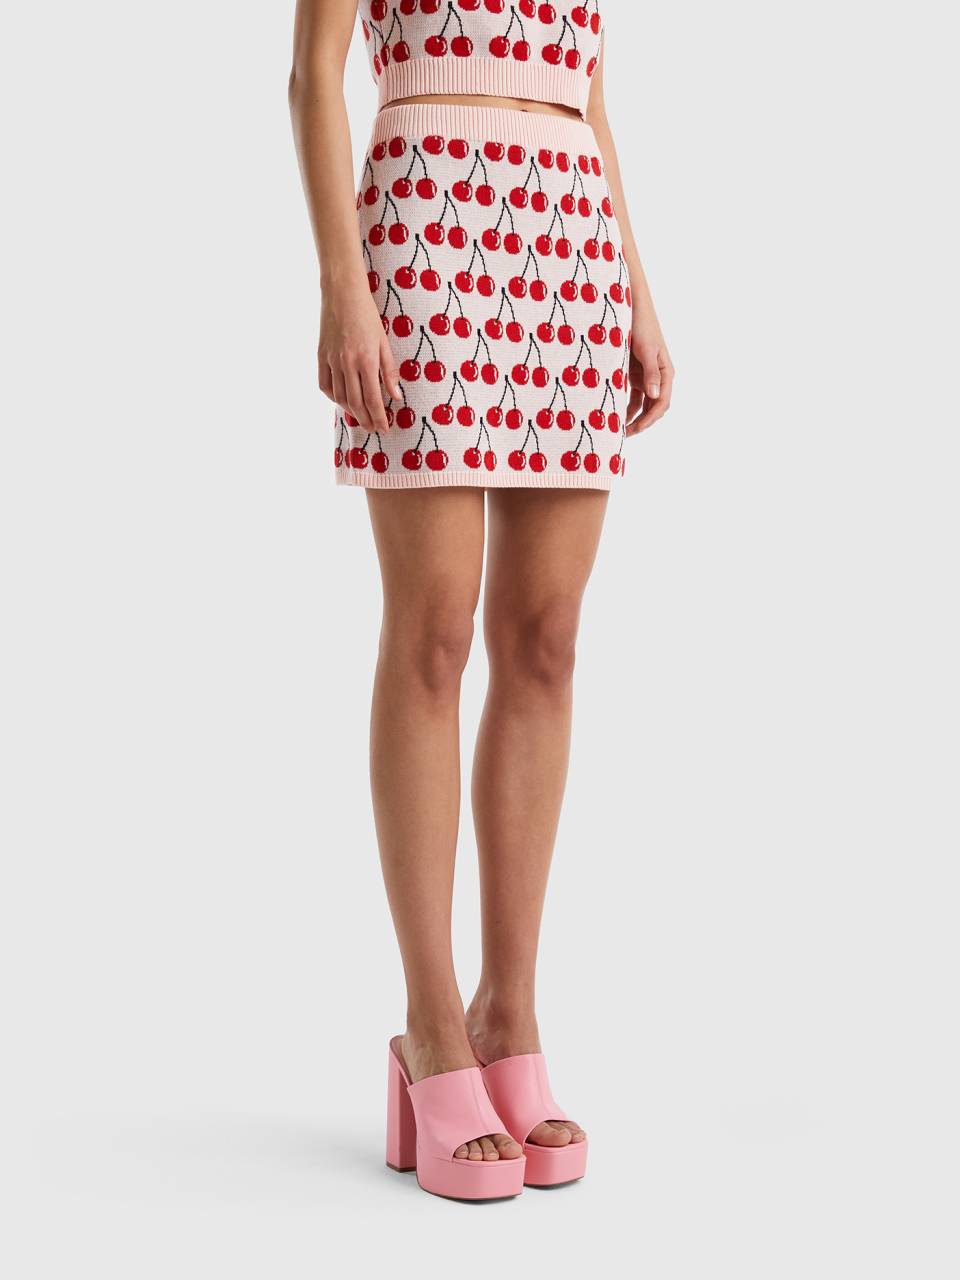 Benetton pink mini skirt with cherry pattern. 1